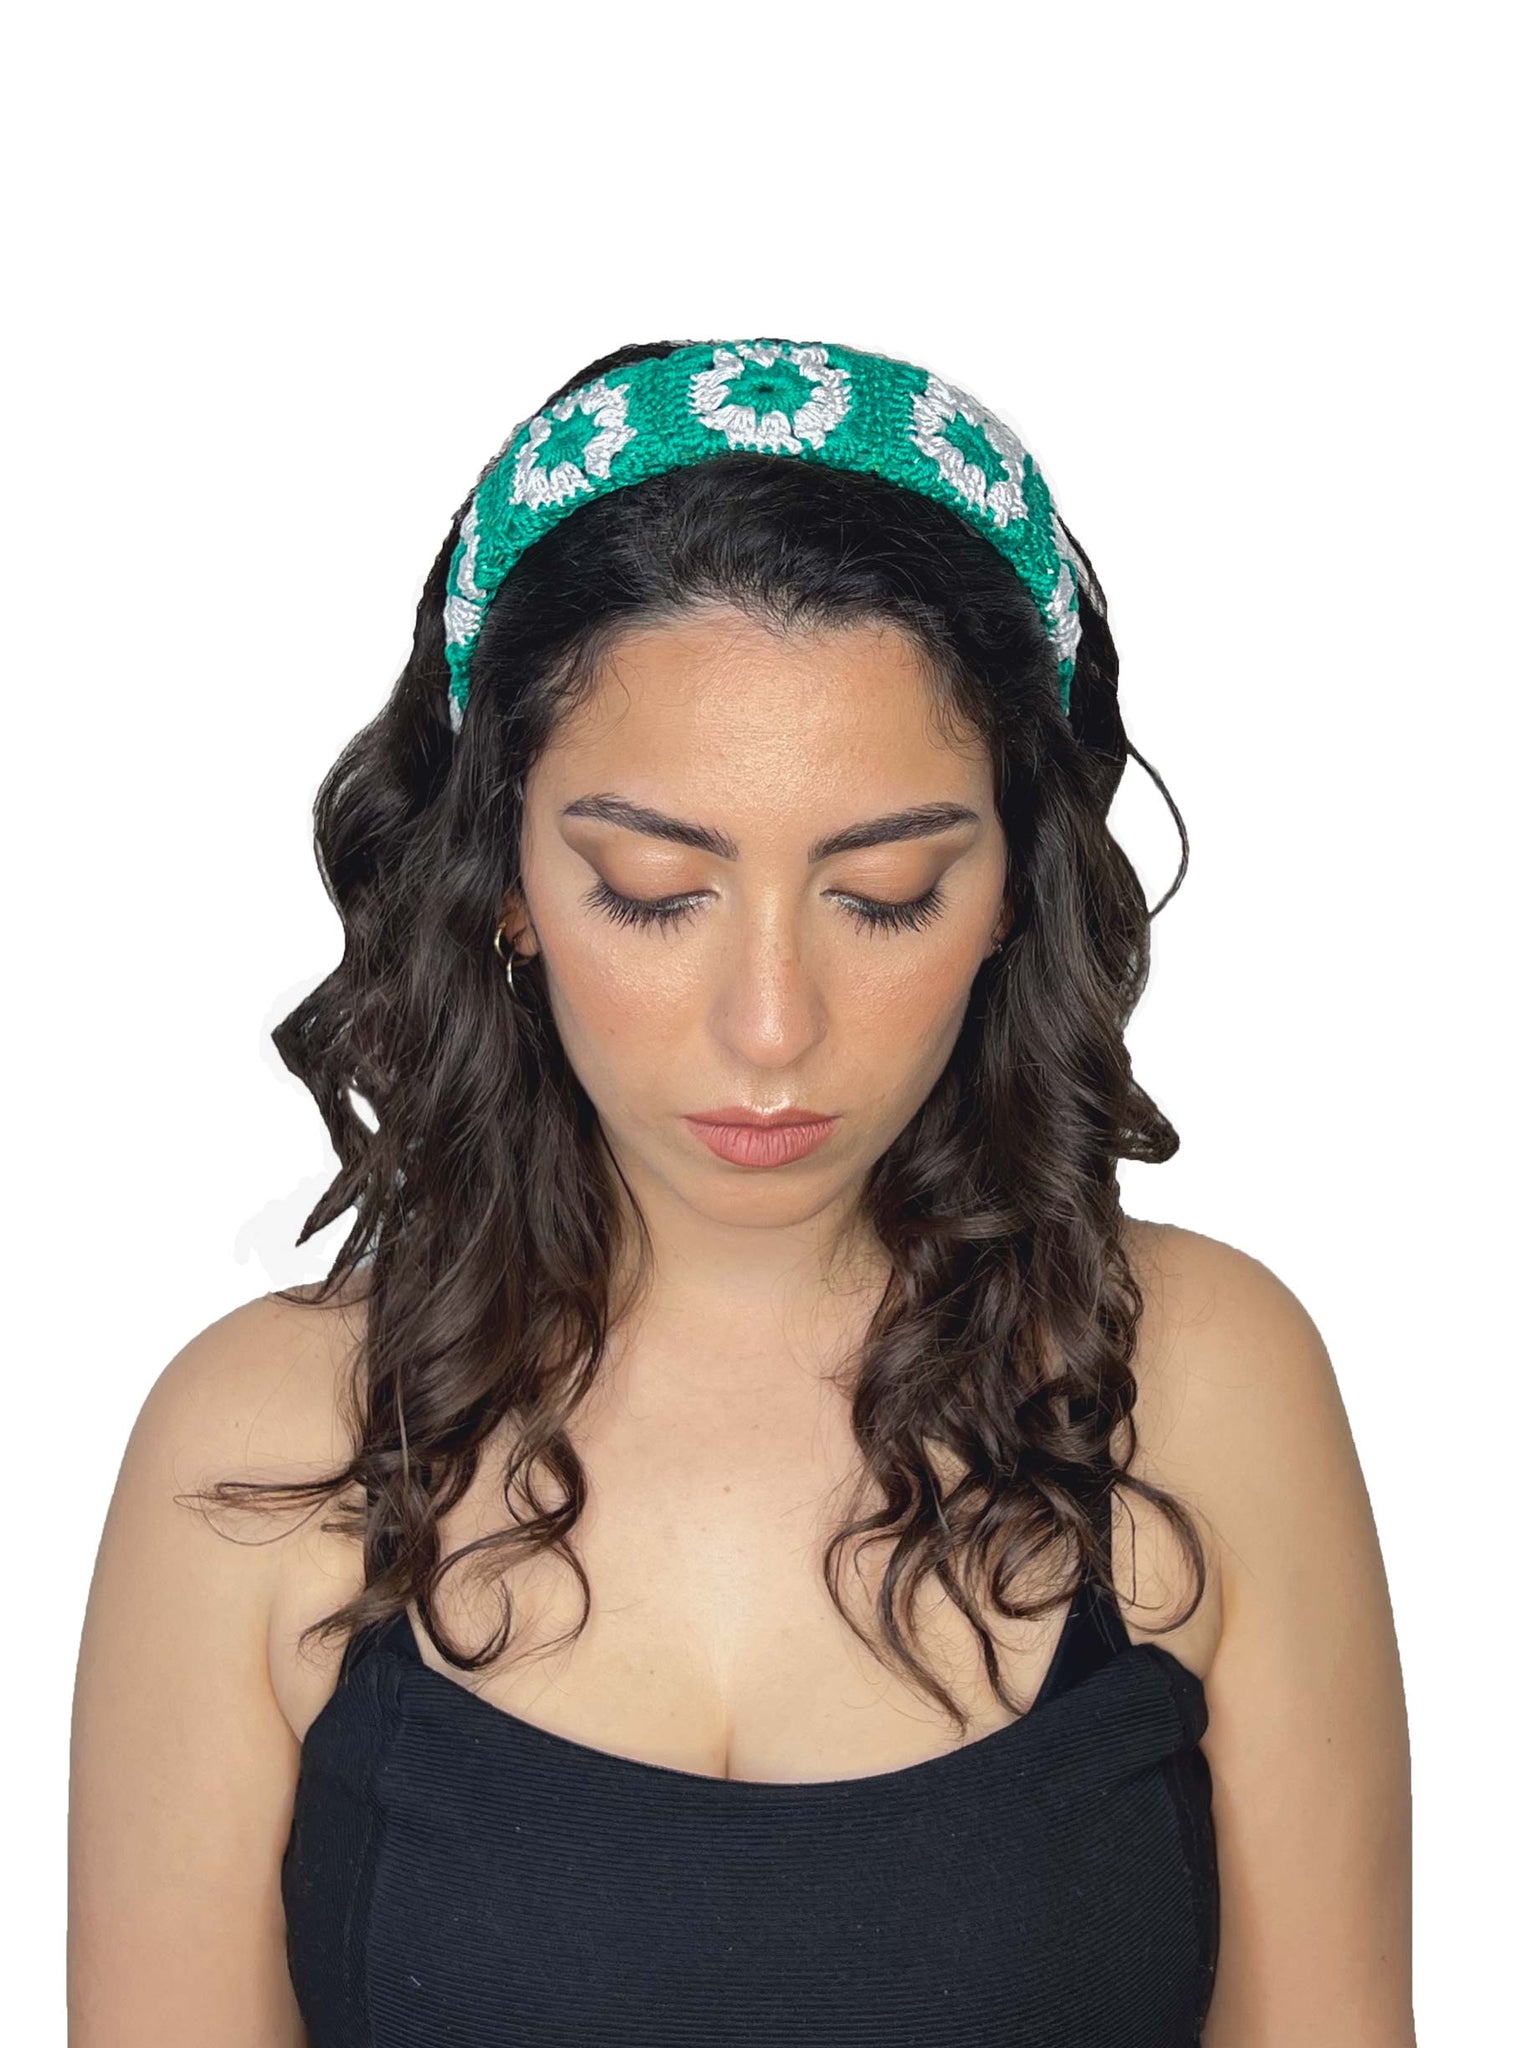 Emerald green and light grey crochet hairband